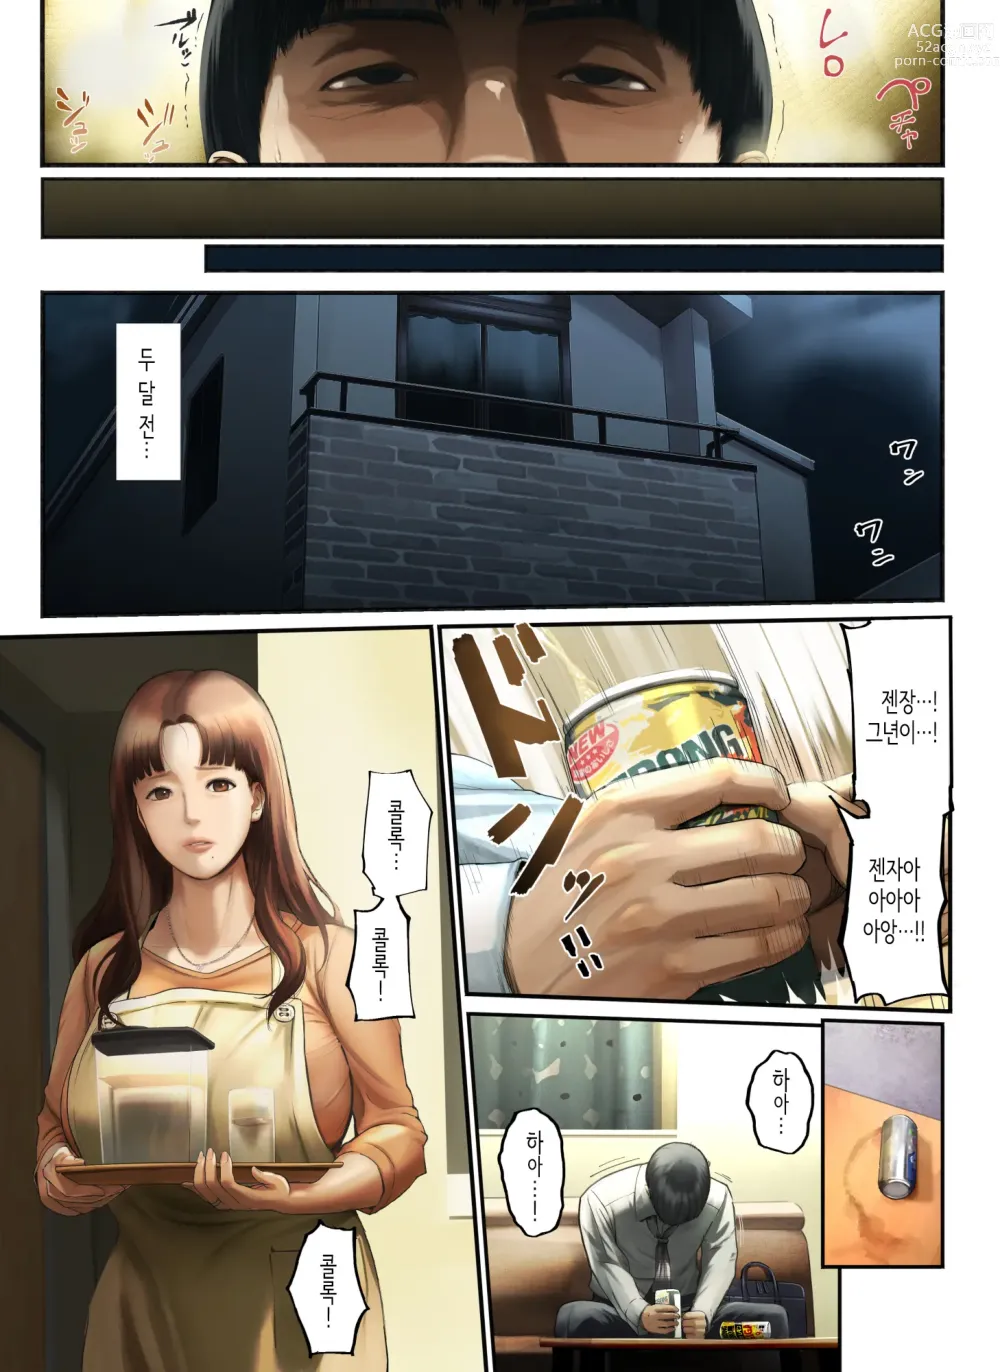 Page 7 of doujinshi 「착하기만 한 남자」라며 아내에게 버림받아서...